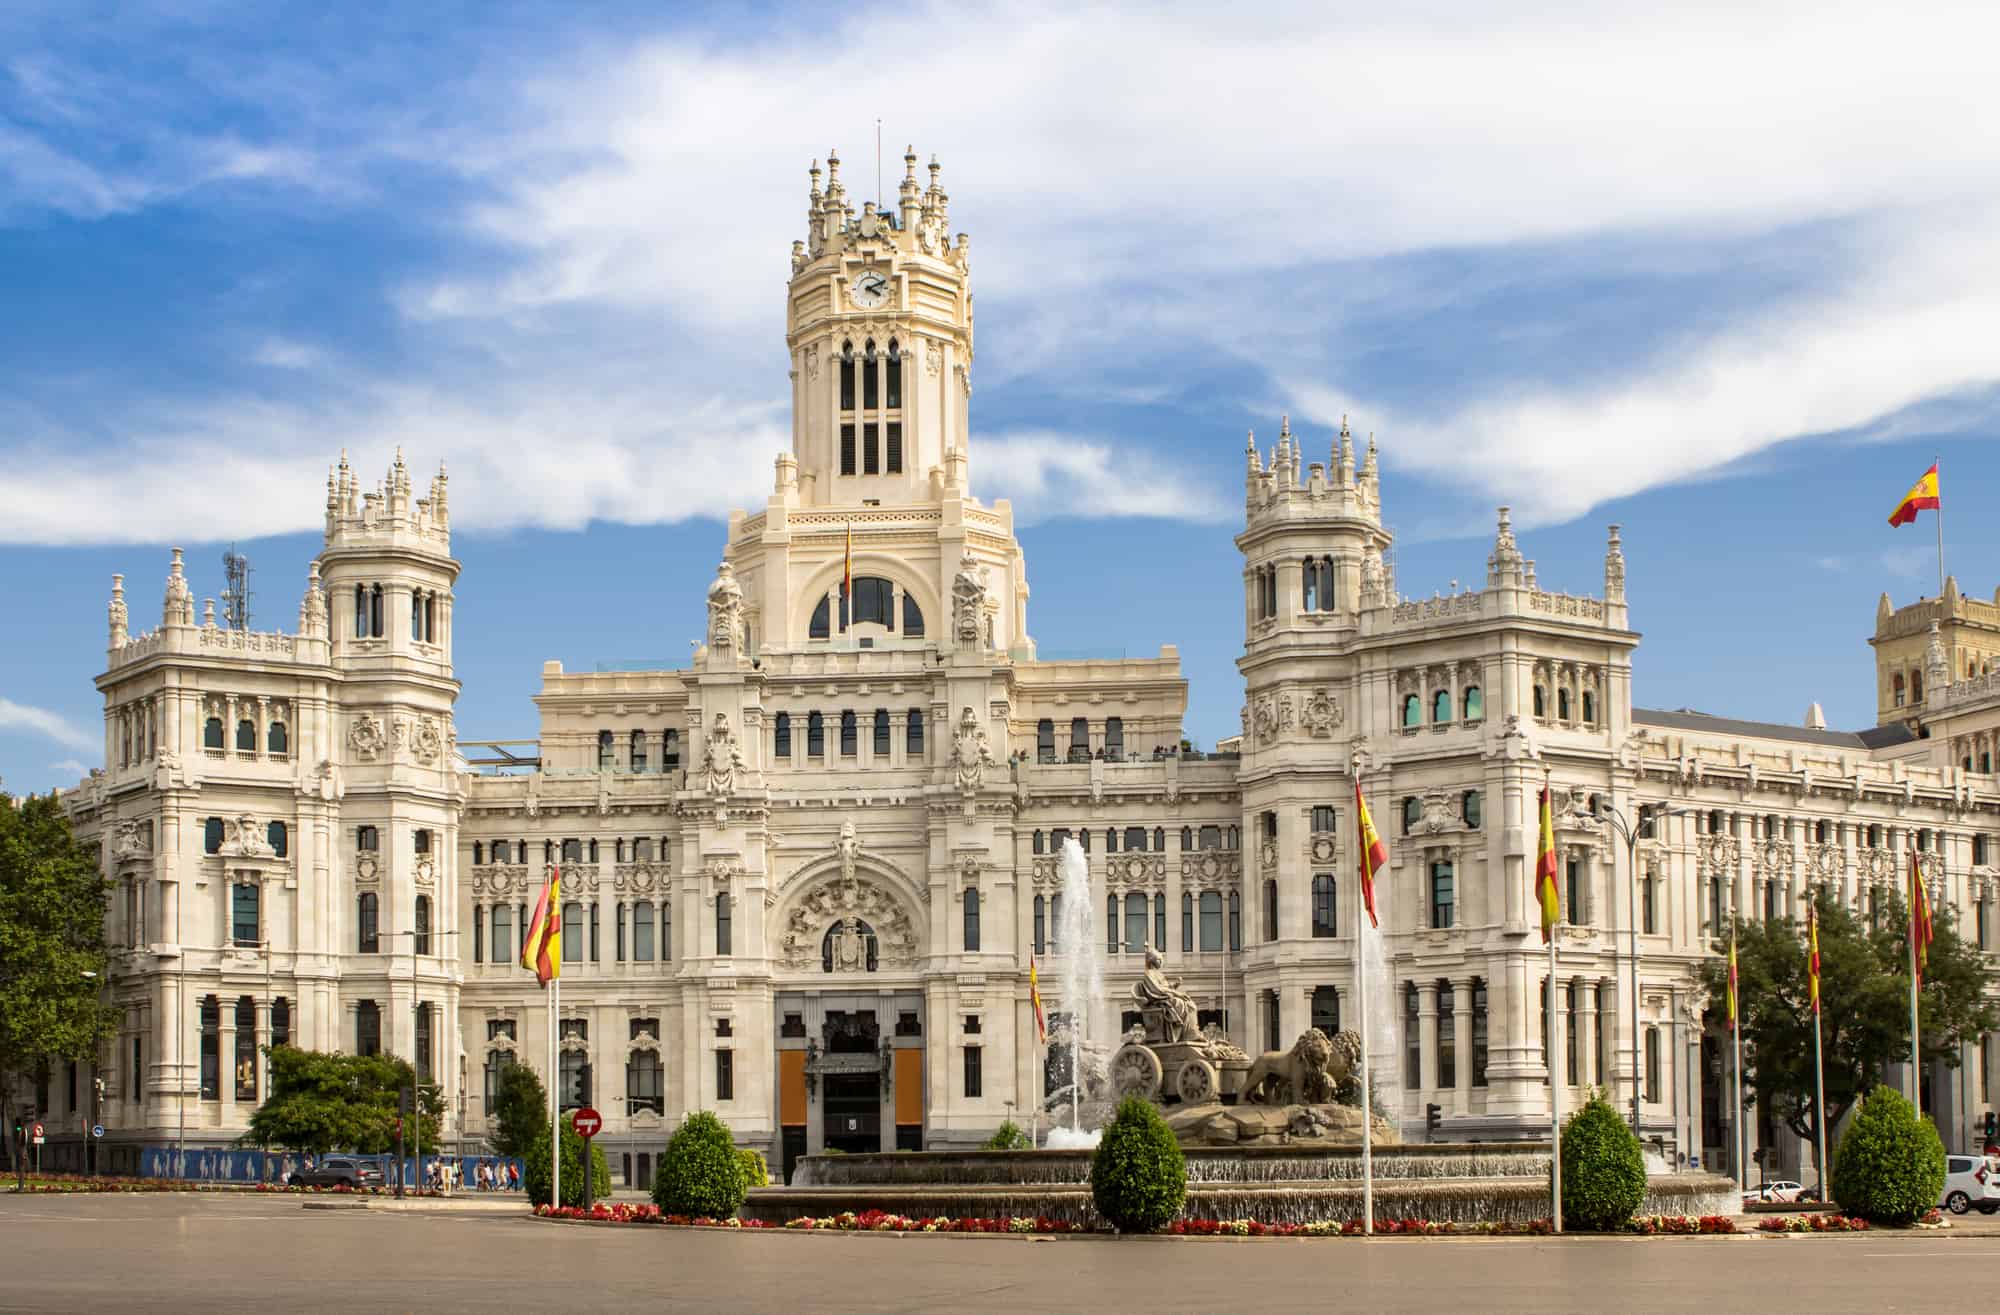 Palacio de Comunicaciones and Cibeles Fountain on the Plaza de Cibeles in Madrid, Spain